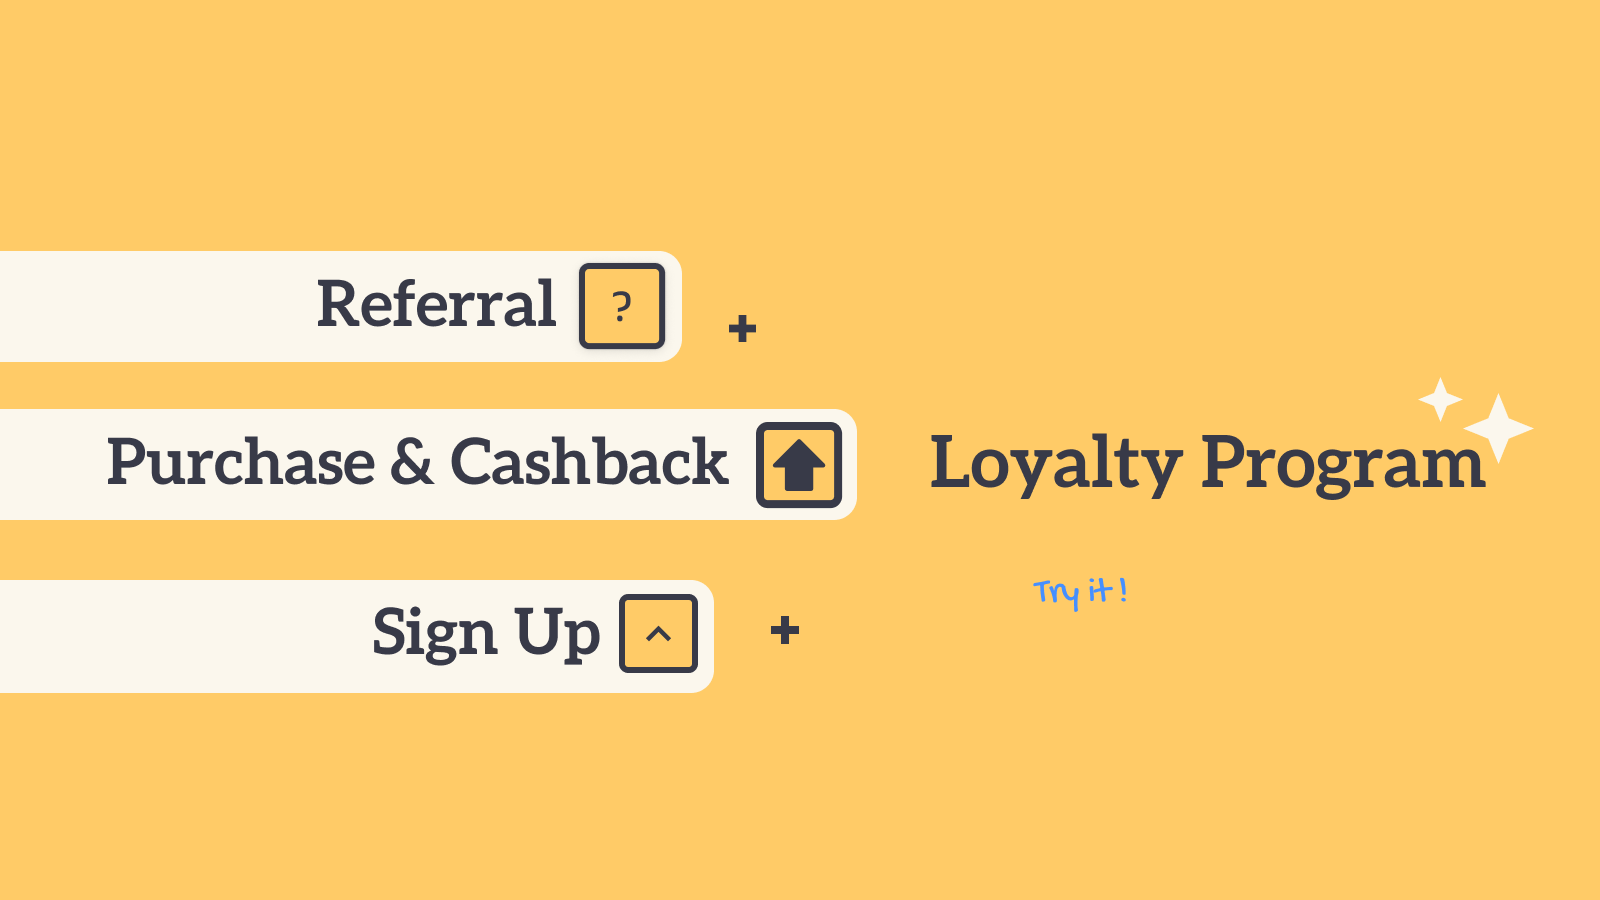 Winkelkrediet Loyaliteitsprogramma | Pabloo